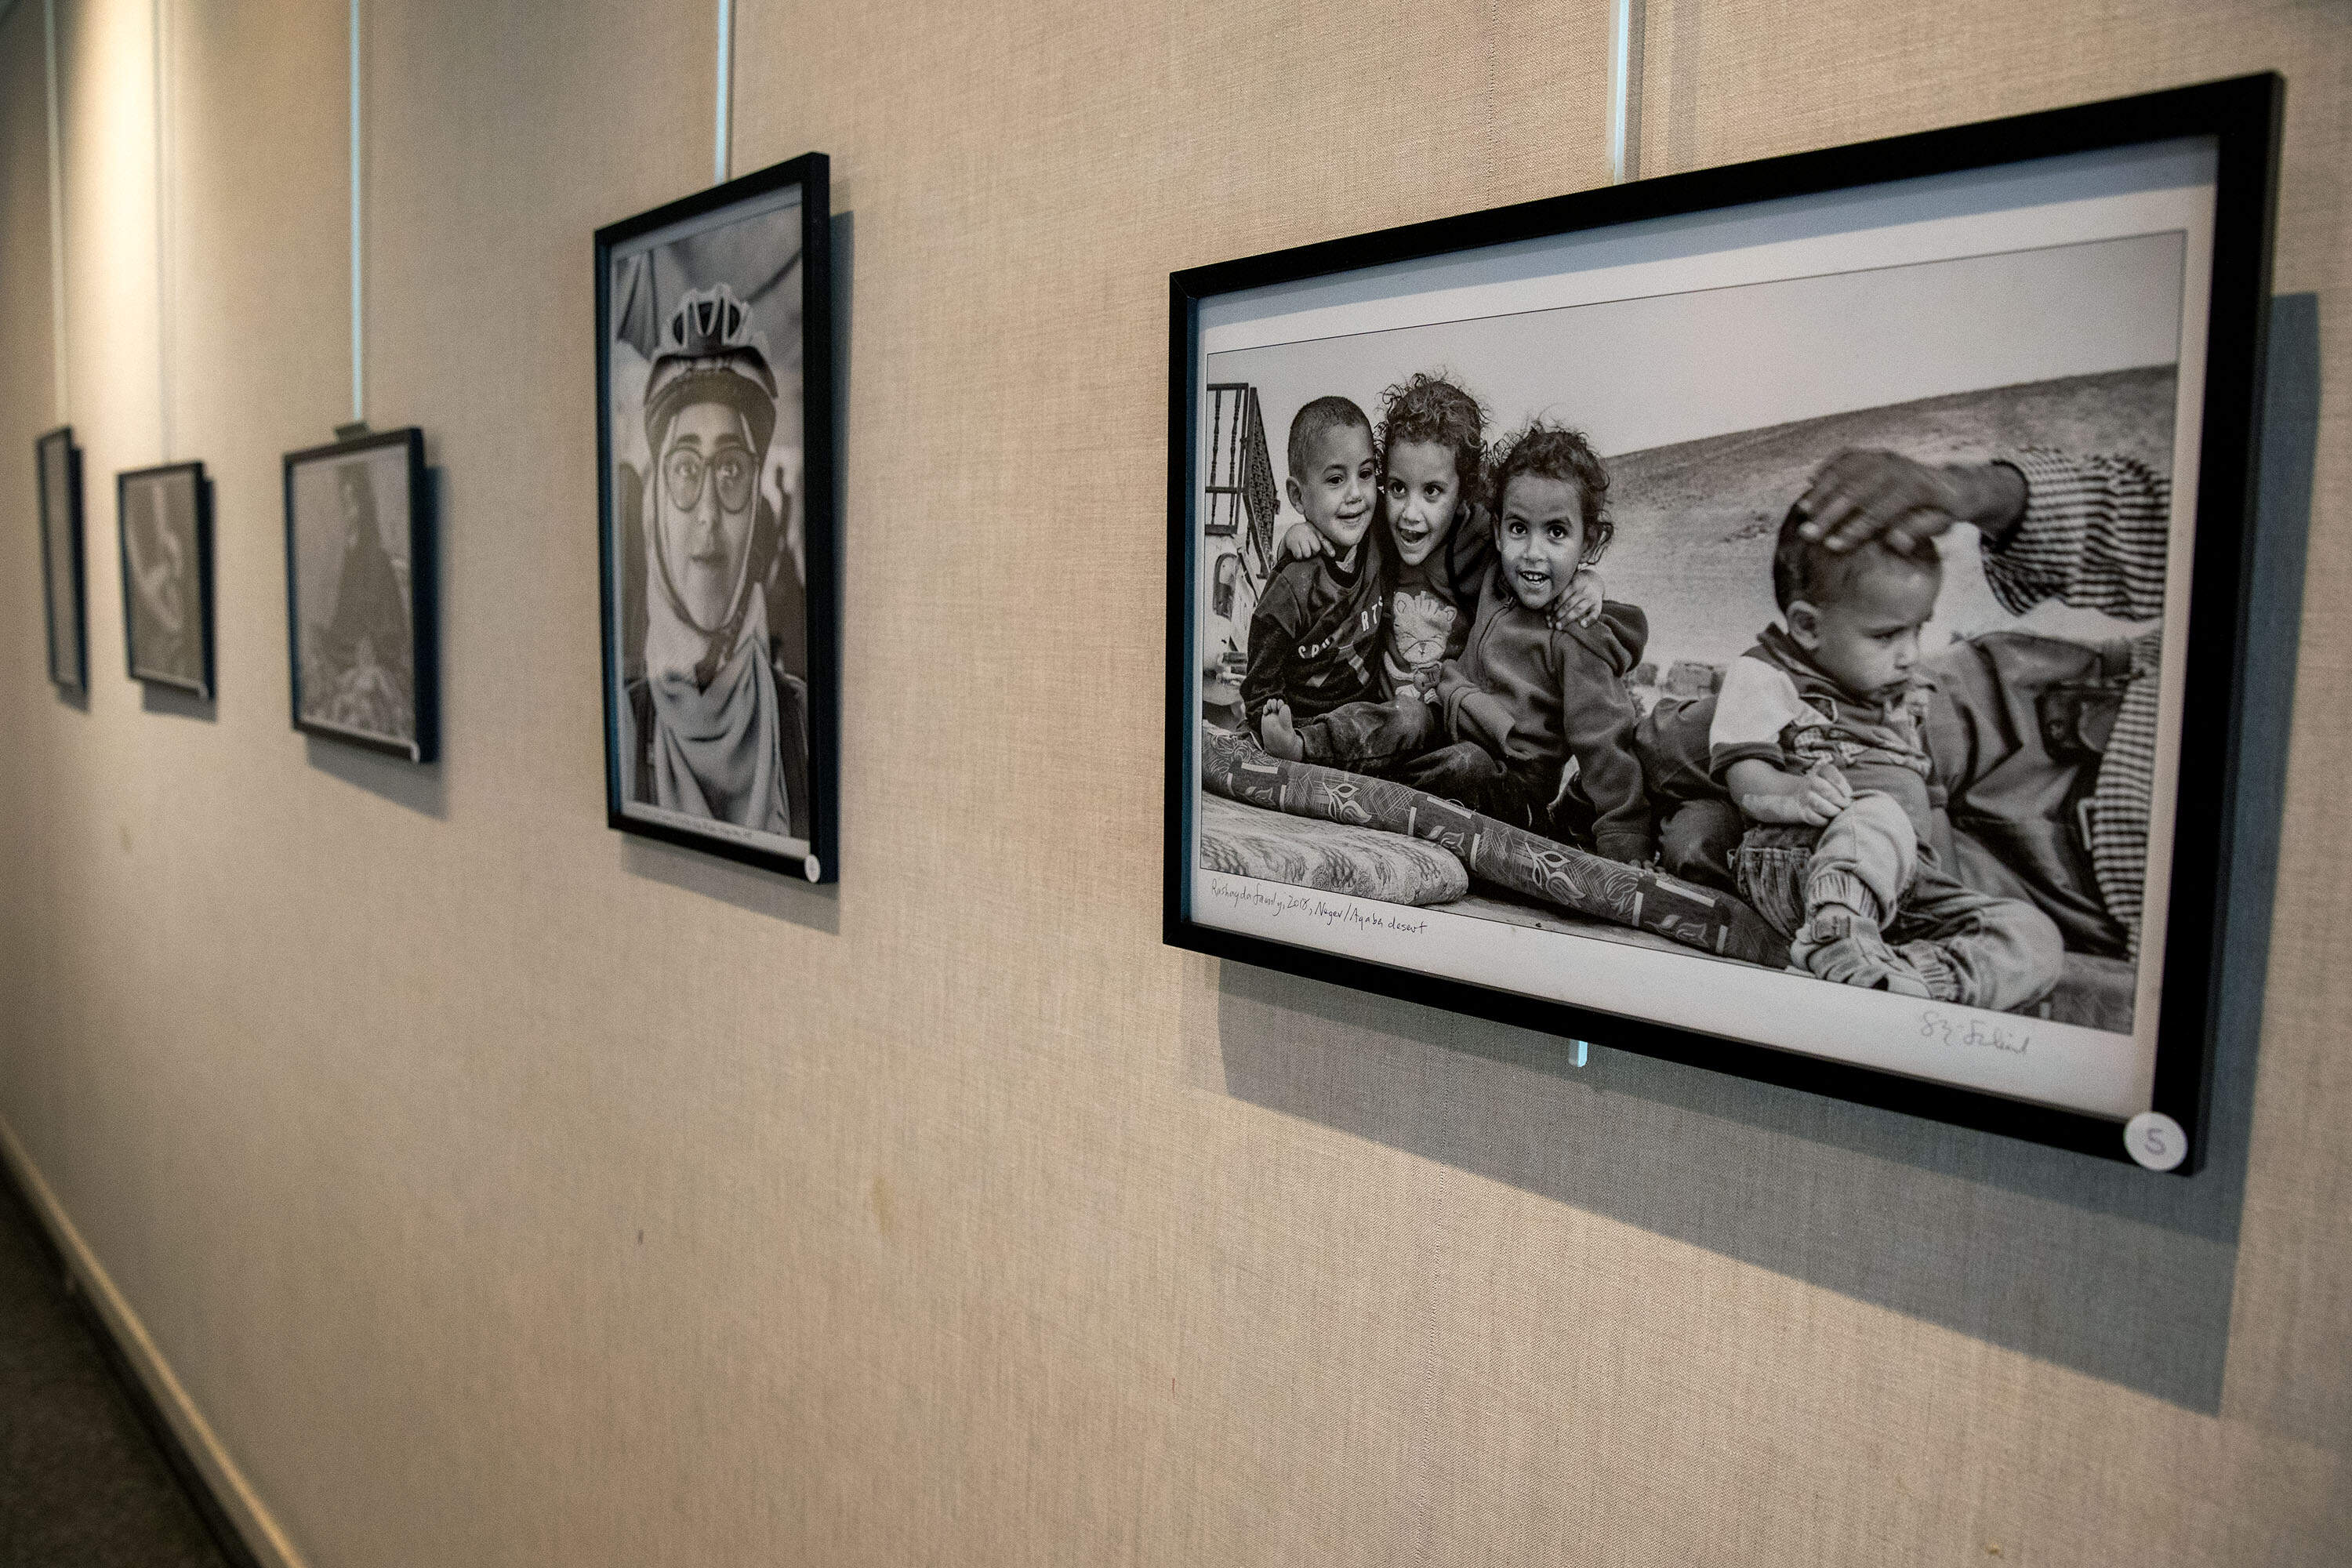 A photograph titled &quot;Rashayda family, 2018, Negev/Aqaba desert&quot; in photographer Skip Shiel's exhibit at Newton Free Library. (Robin Lubbock/WBUR)